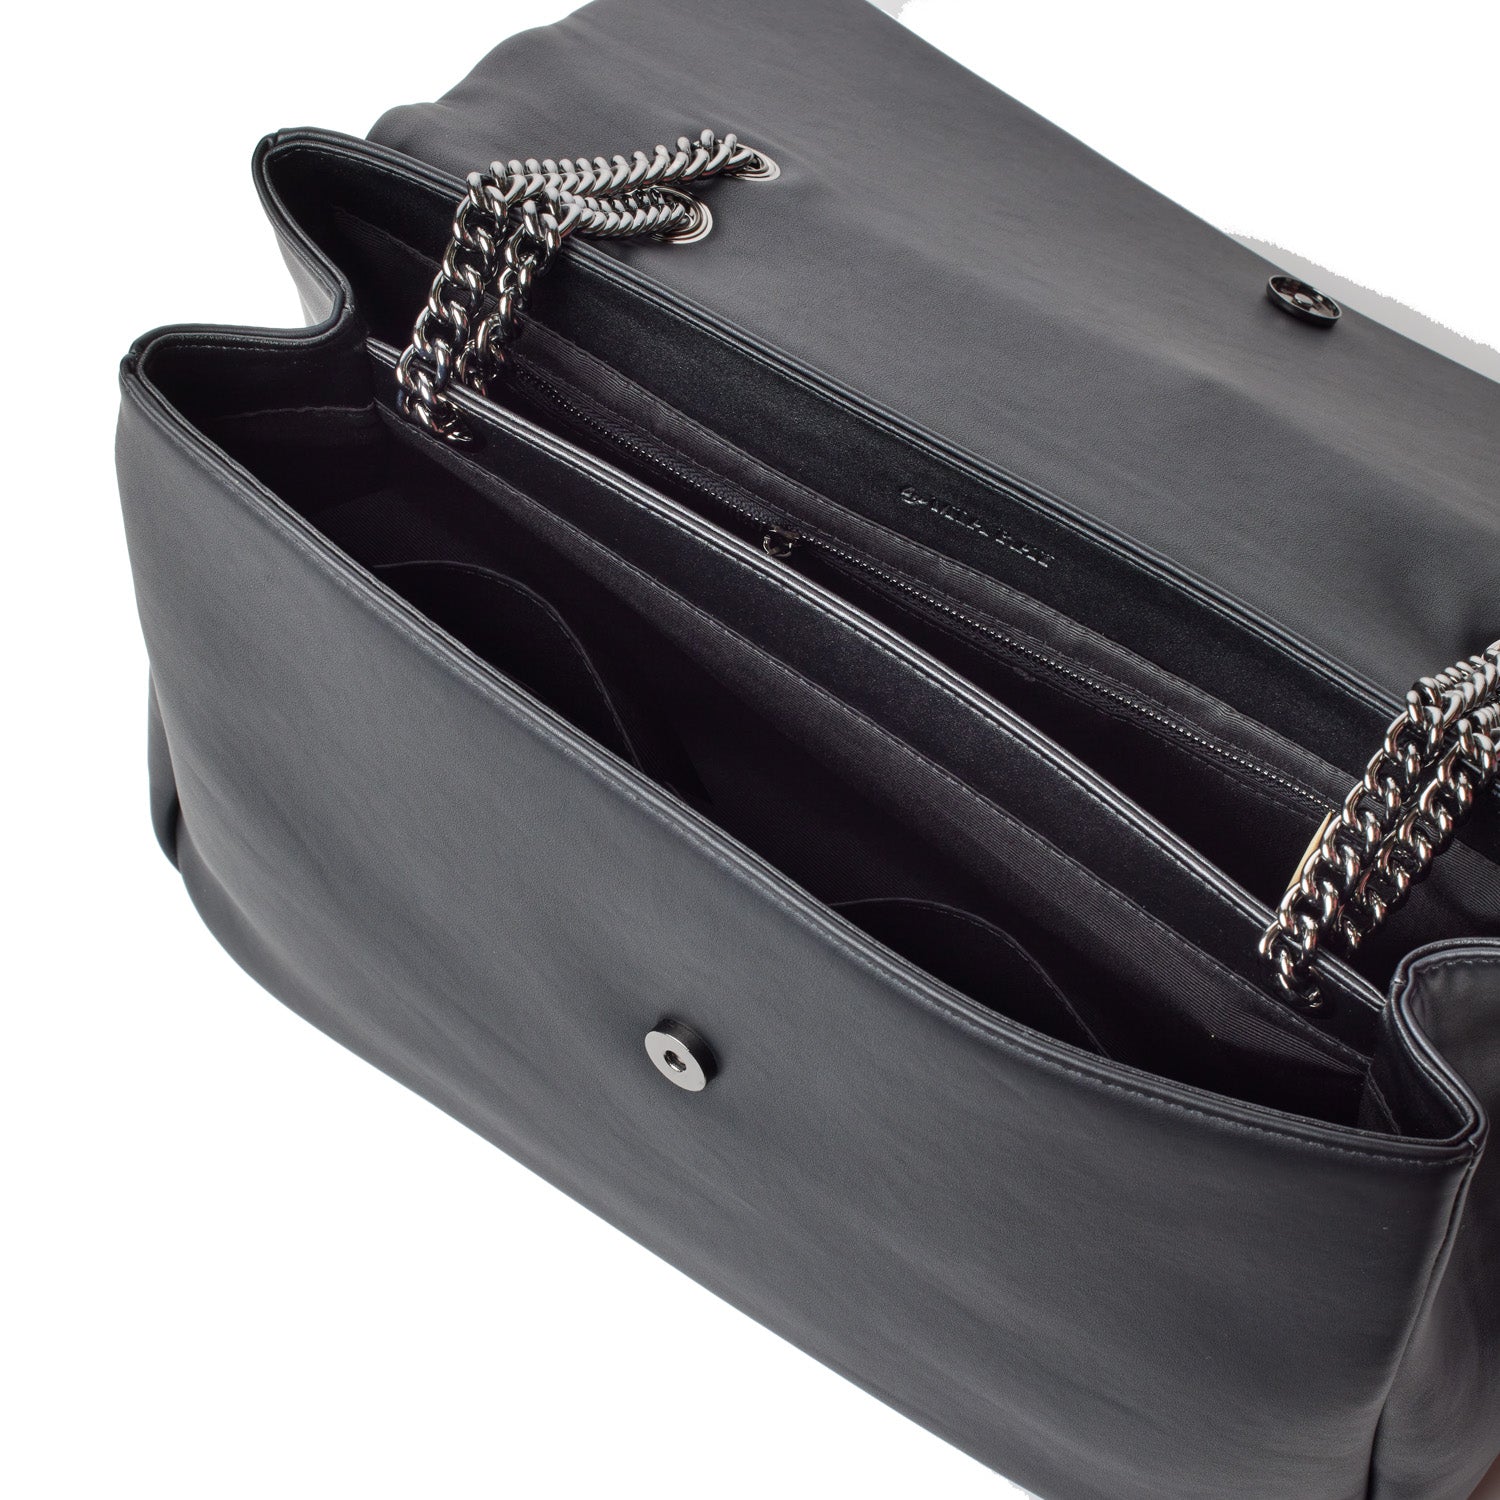 STANDARD LARGE CLASSIC FLAP BAG MATTE BLACK – Glam-Aholic Lifestyle